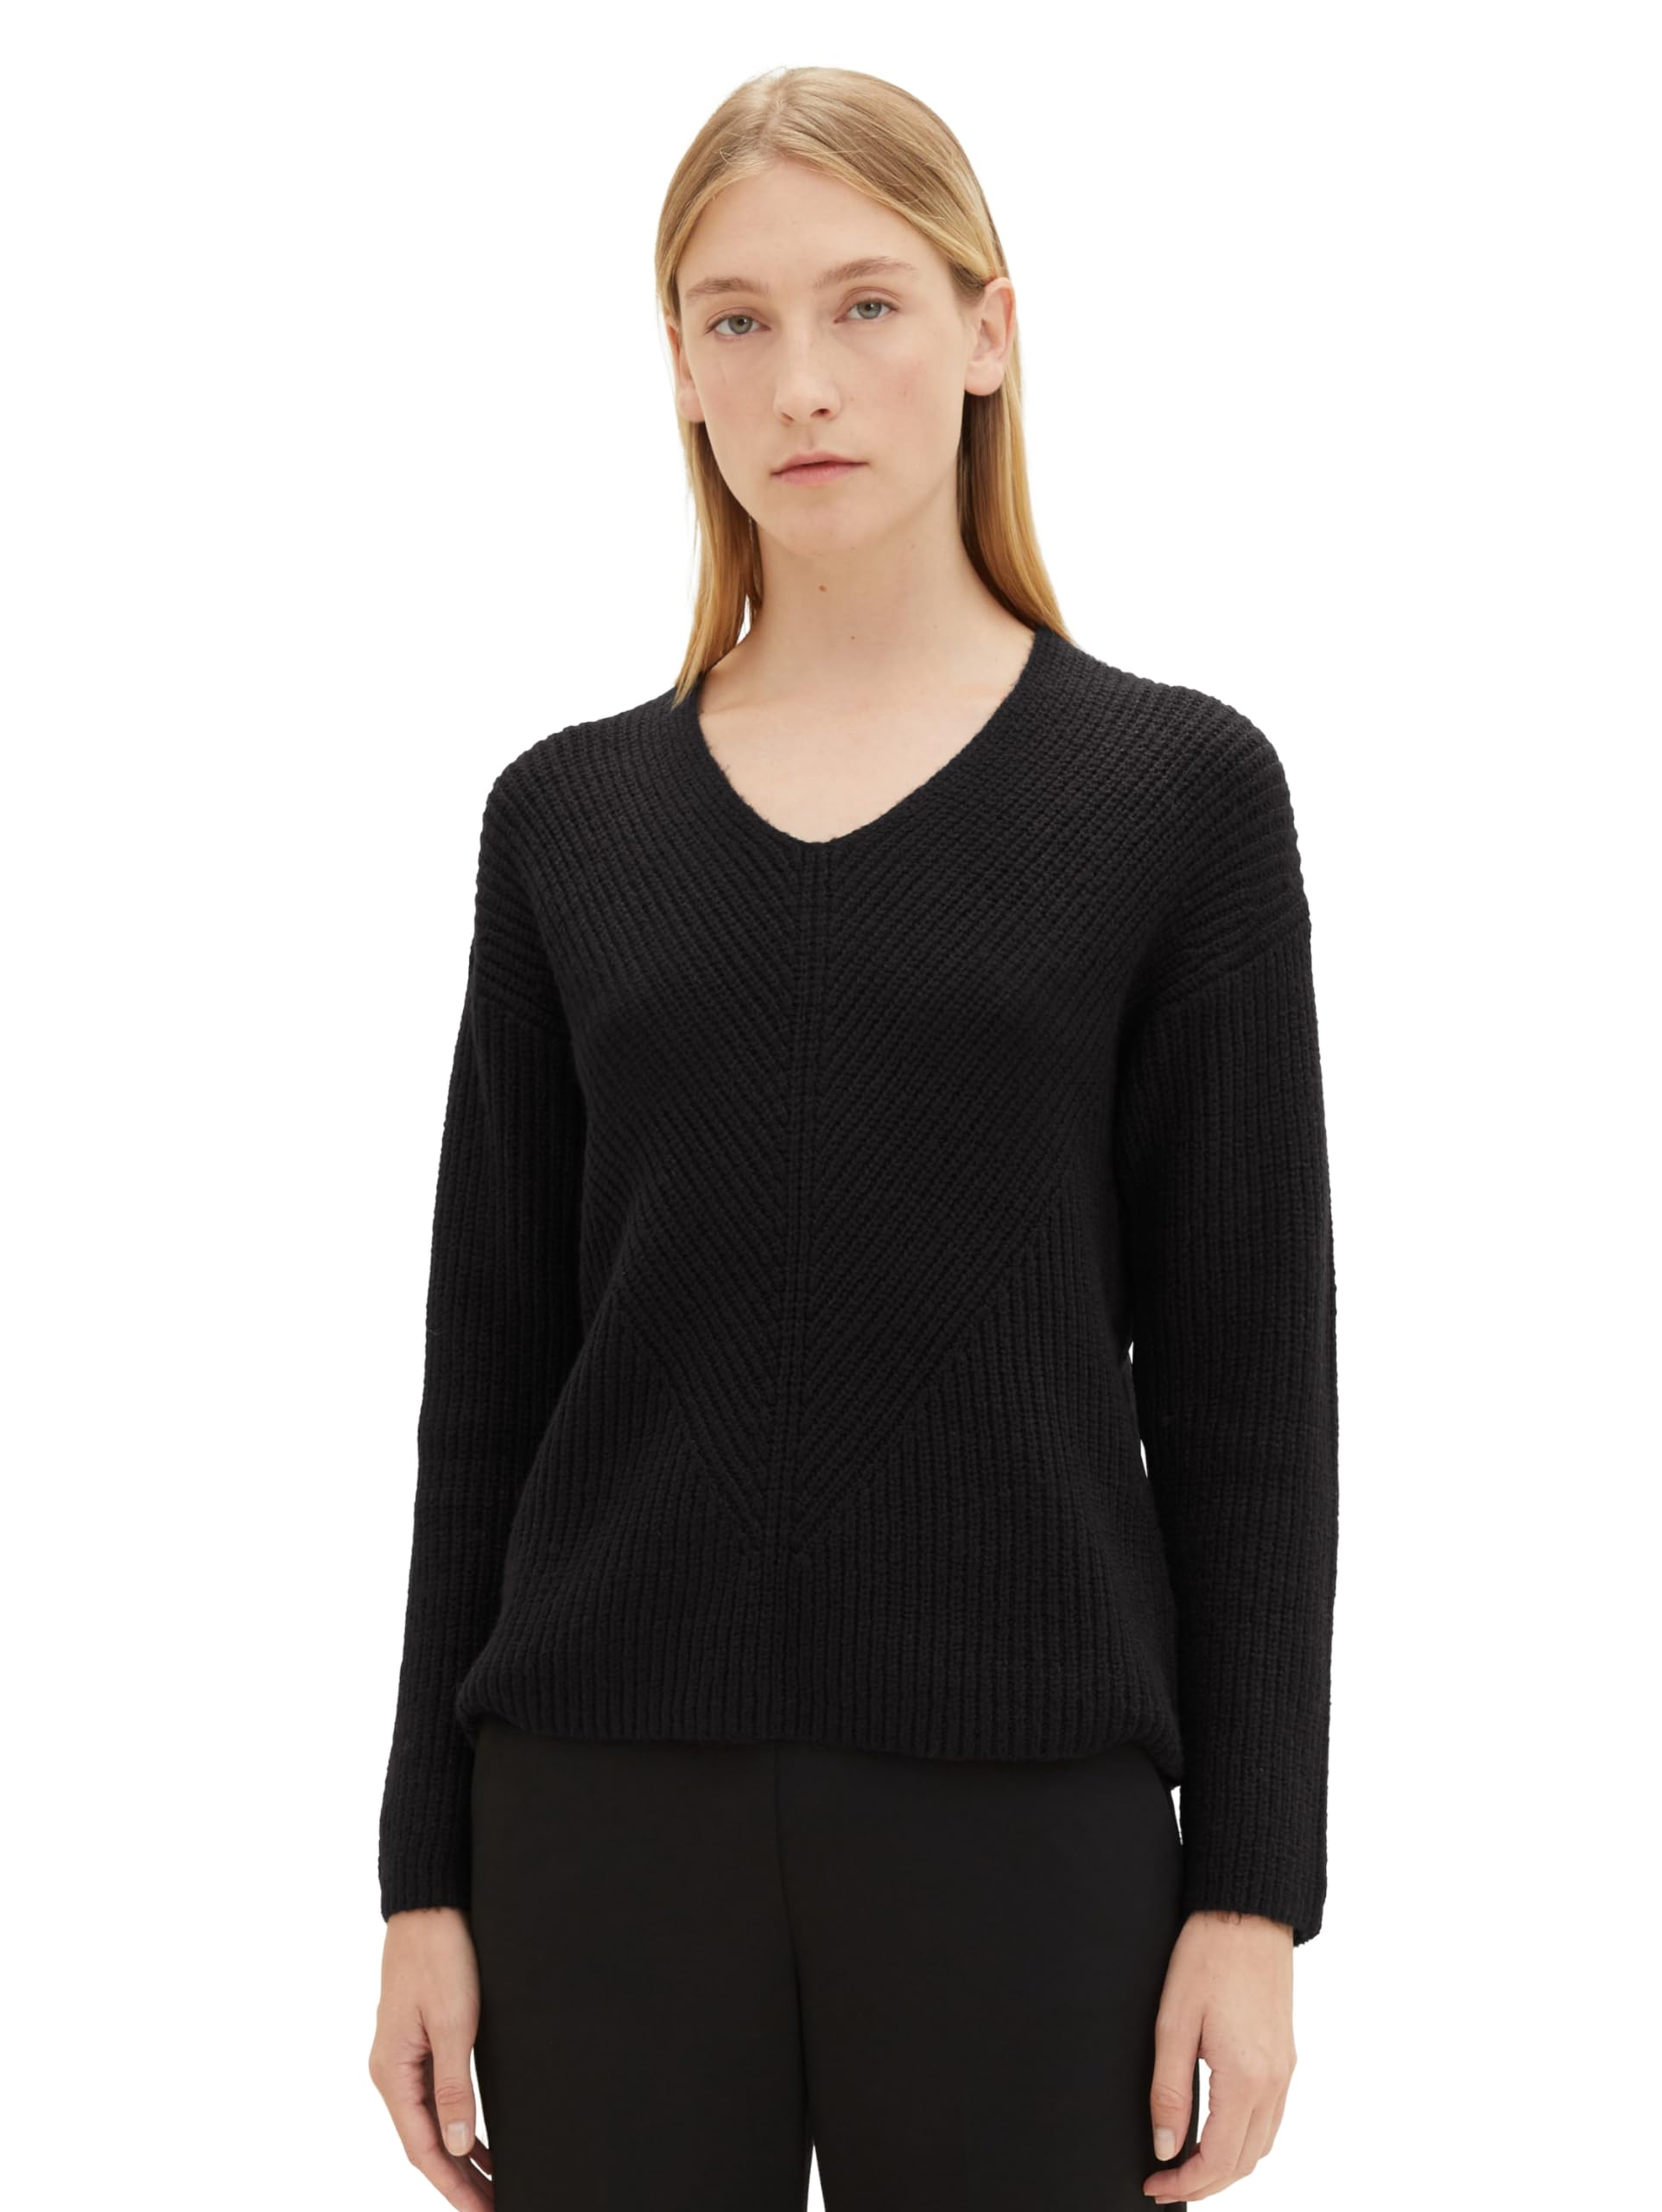 TOM TAILOR Damen 1039242 Basic Pullover mit V-Ausschnitt, 14482-deep Black, XXXL